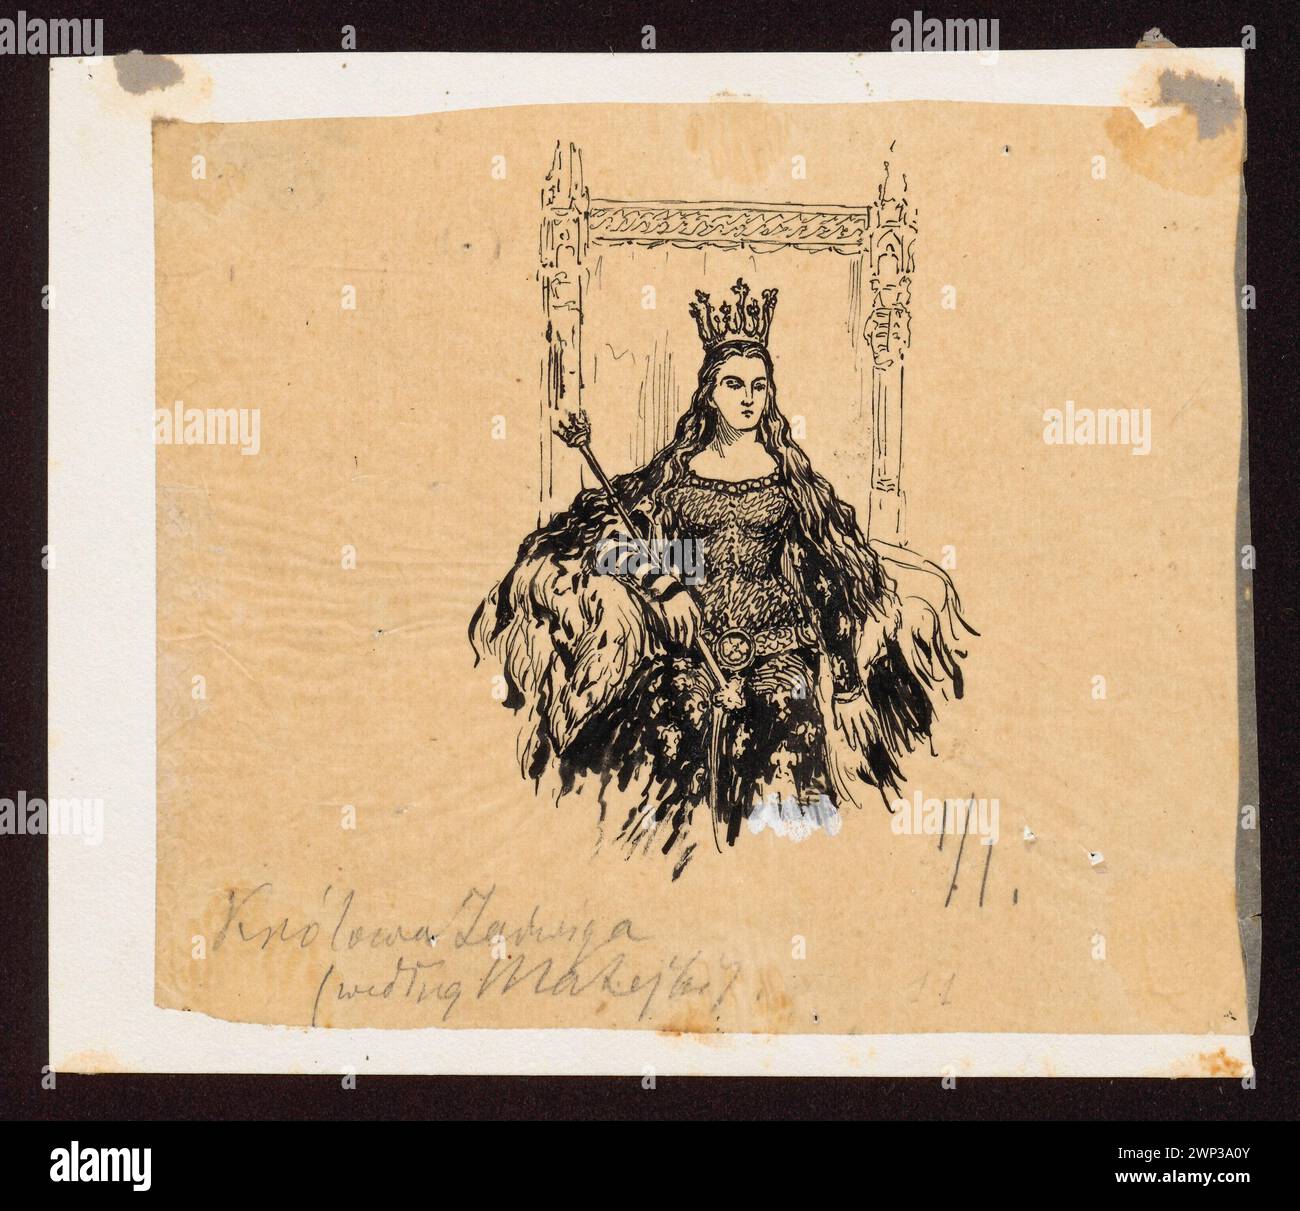 Reine Jadwiga ; Ruszczyc, Ferdynand (1870-1936), Matejko, Jan (1838-1893); 1915 (1915-00-00-1915-00-00);Jadwiga (Reine de Pologne - 1374-1399), partage plus, projets d'illustration, achat (provenance) Banque D'Images